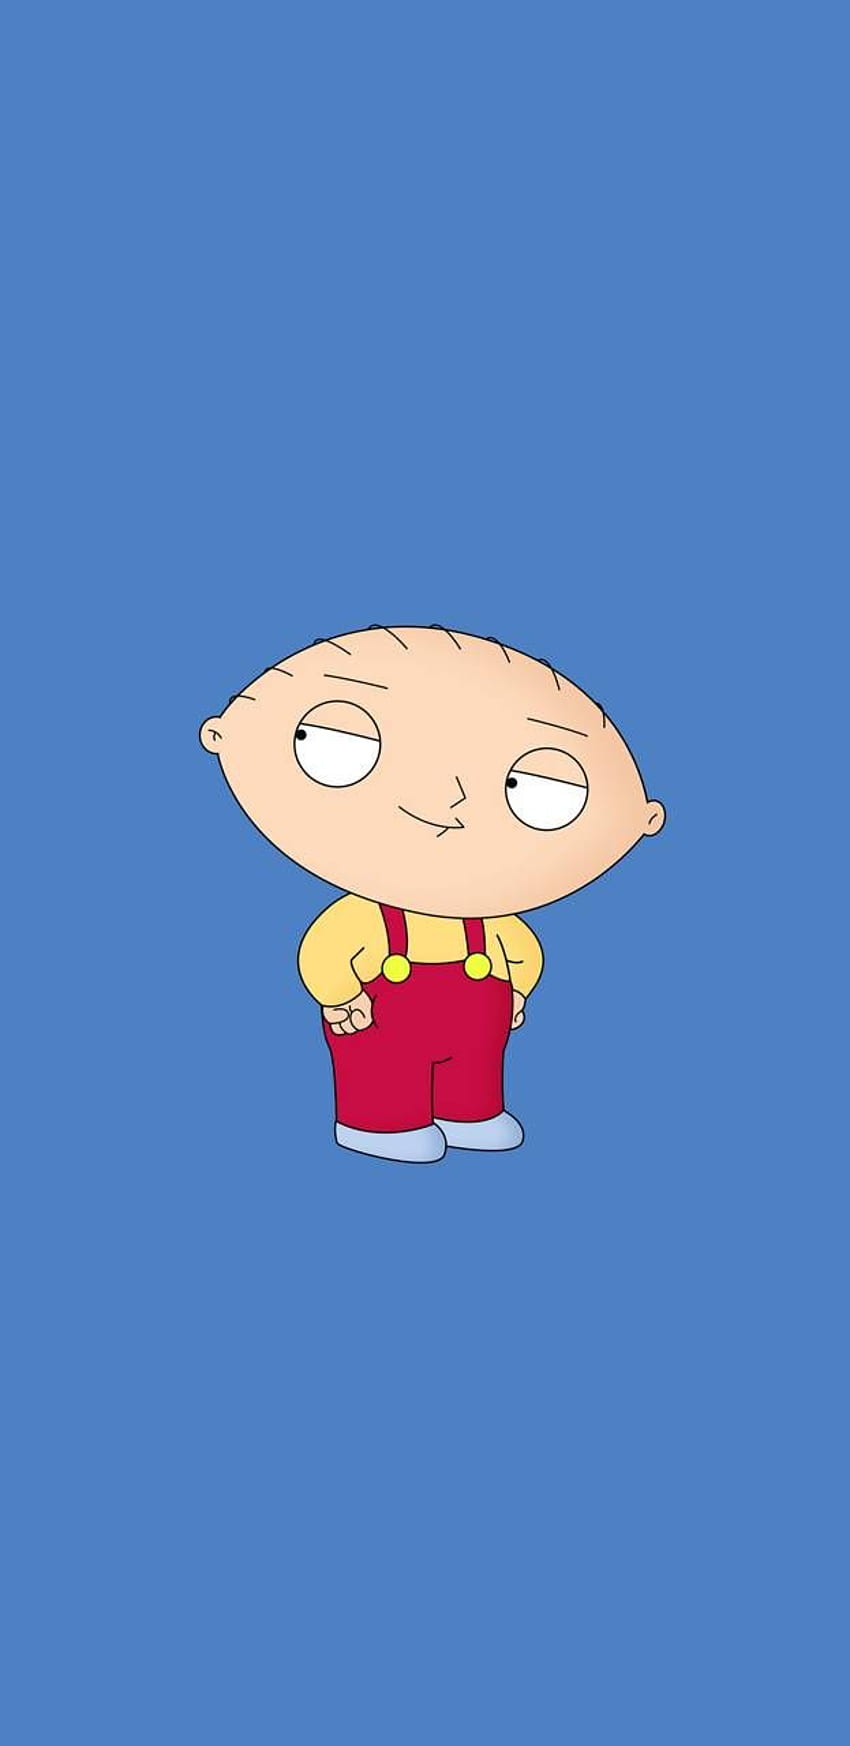 Family Guy Desktop Wallpaper 4k - Wallpaperforu